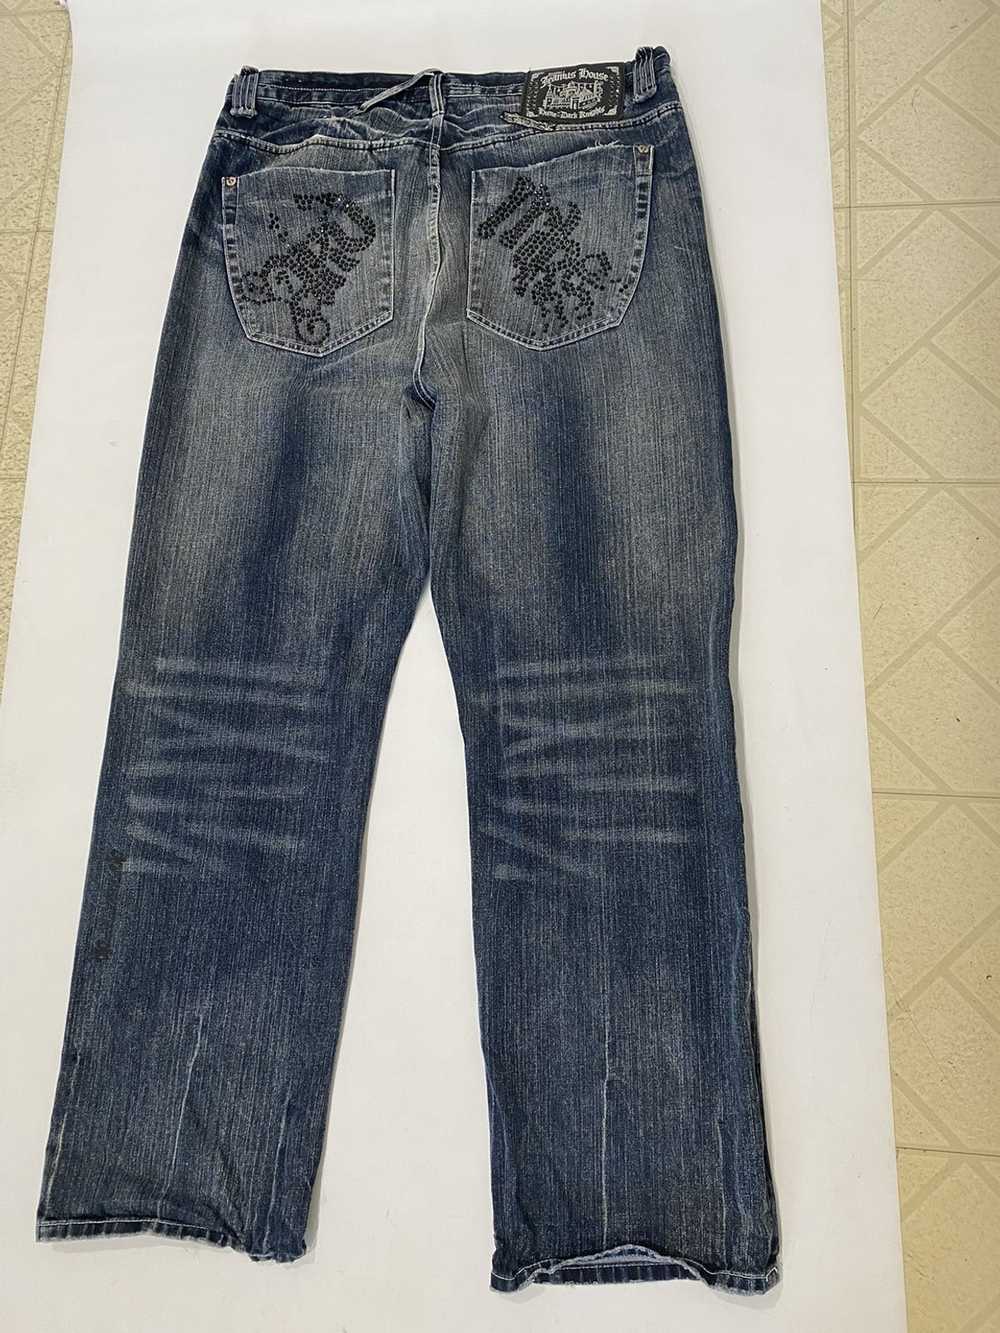 Akademiks Akademiks Men's Jeans Size 40 - image 11